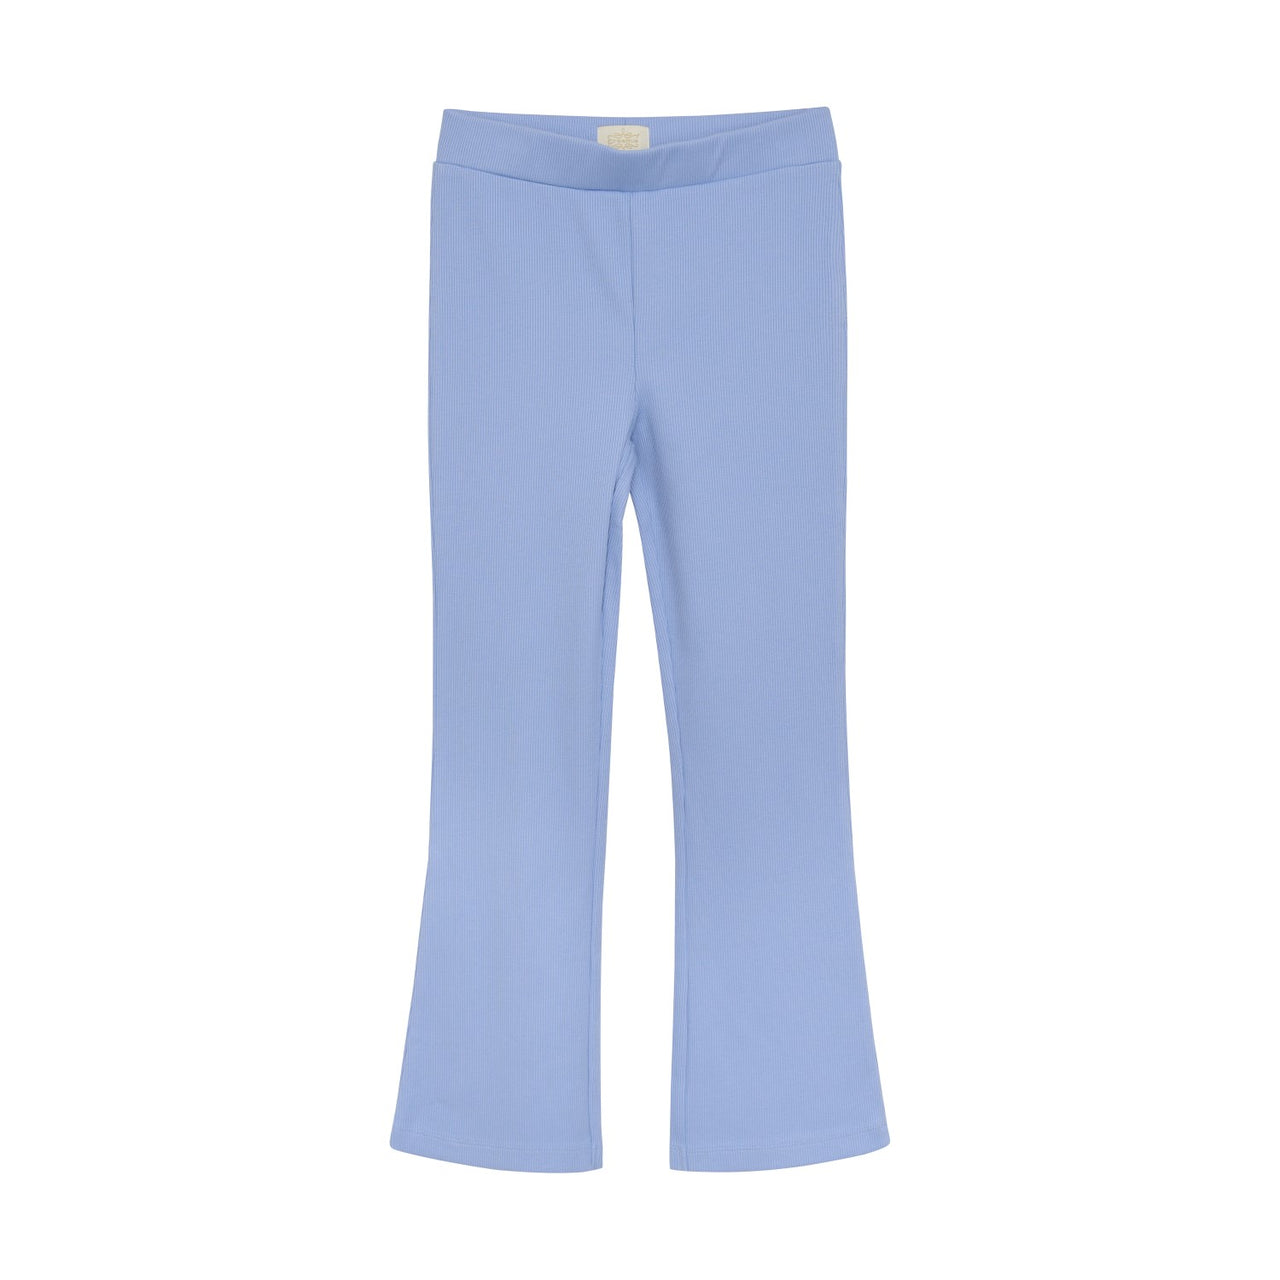 Bel Air Blue Rib Pants